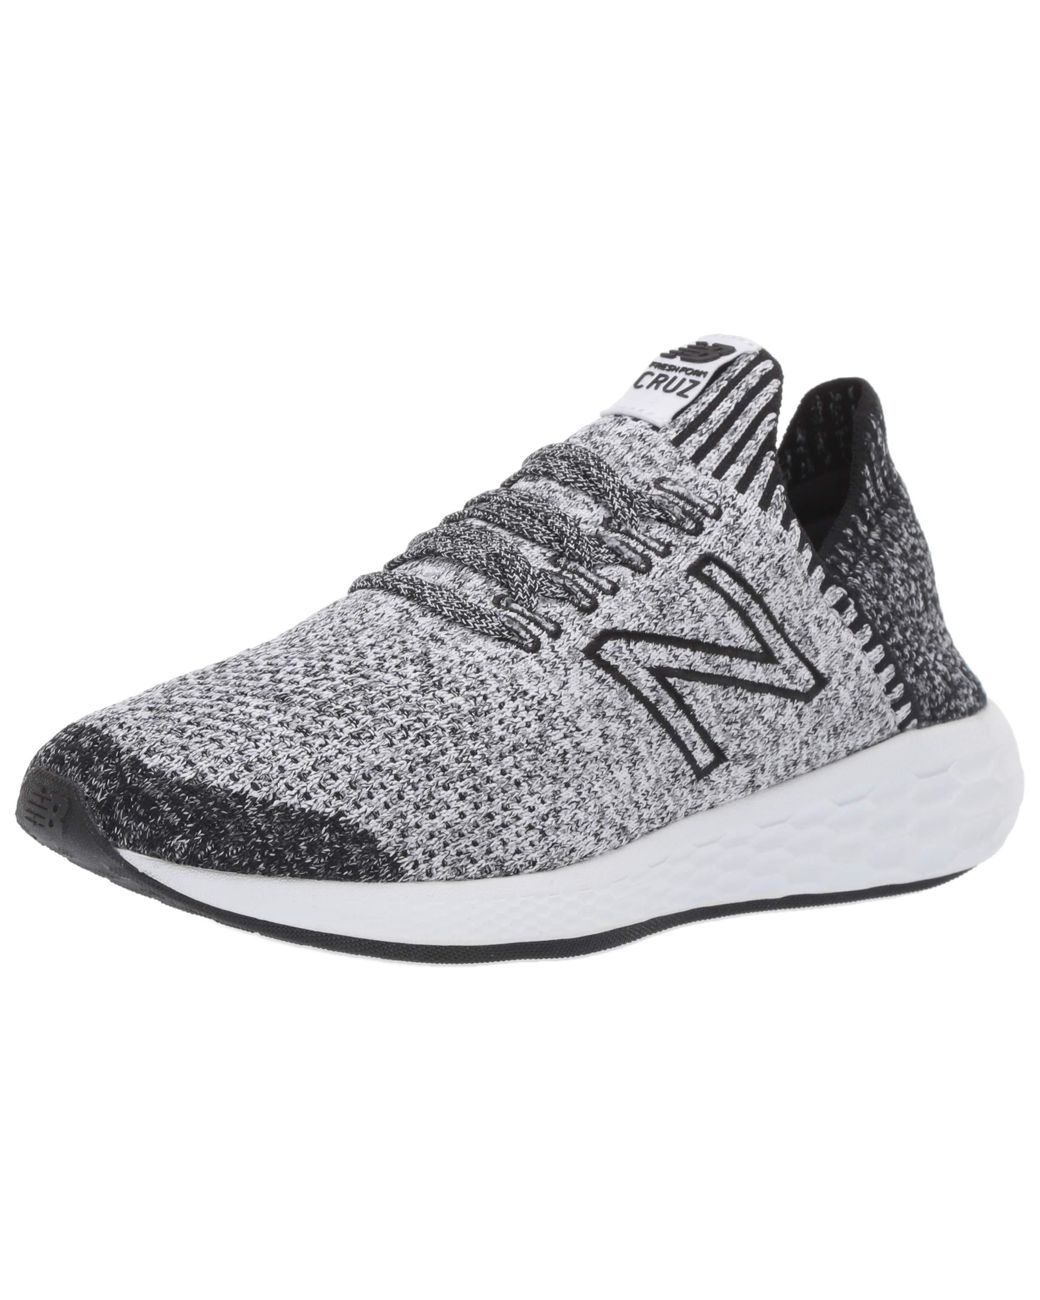 New Balance Fresh Foam Cruz Sockfit Running Shoes in Black/White (Black) -  Save 69% | Lyst